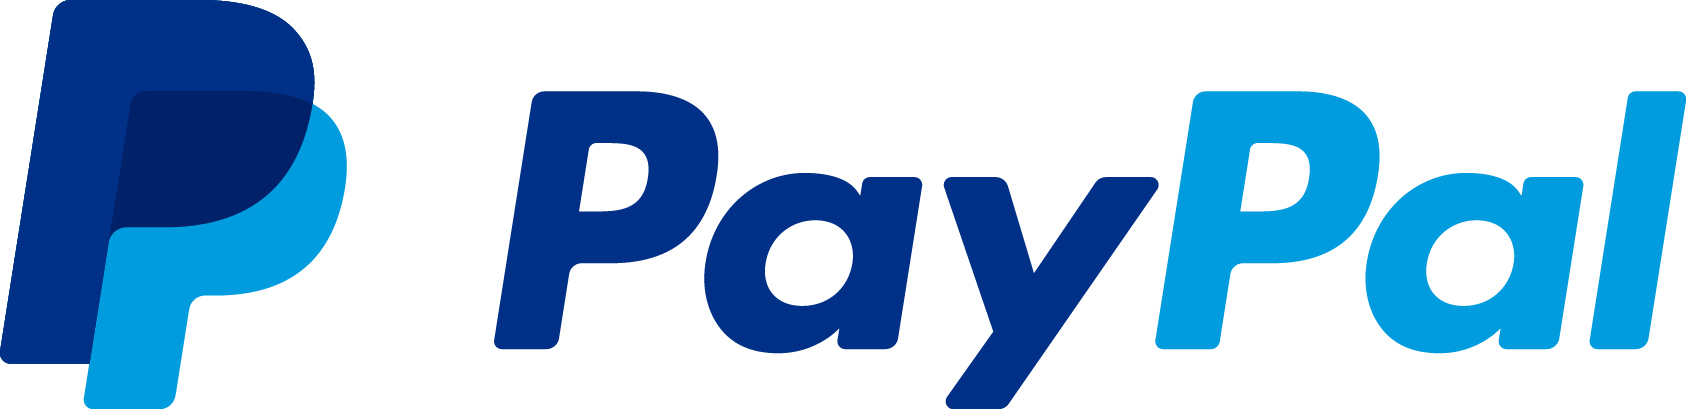 FullColor_Horizontal_Logo_RGB PayPal